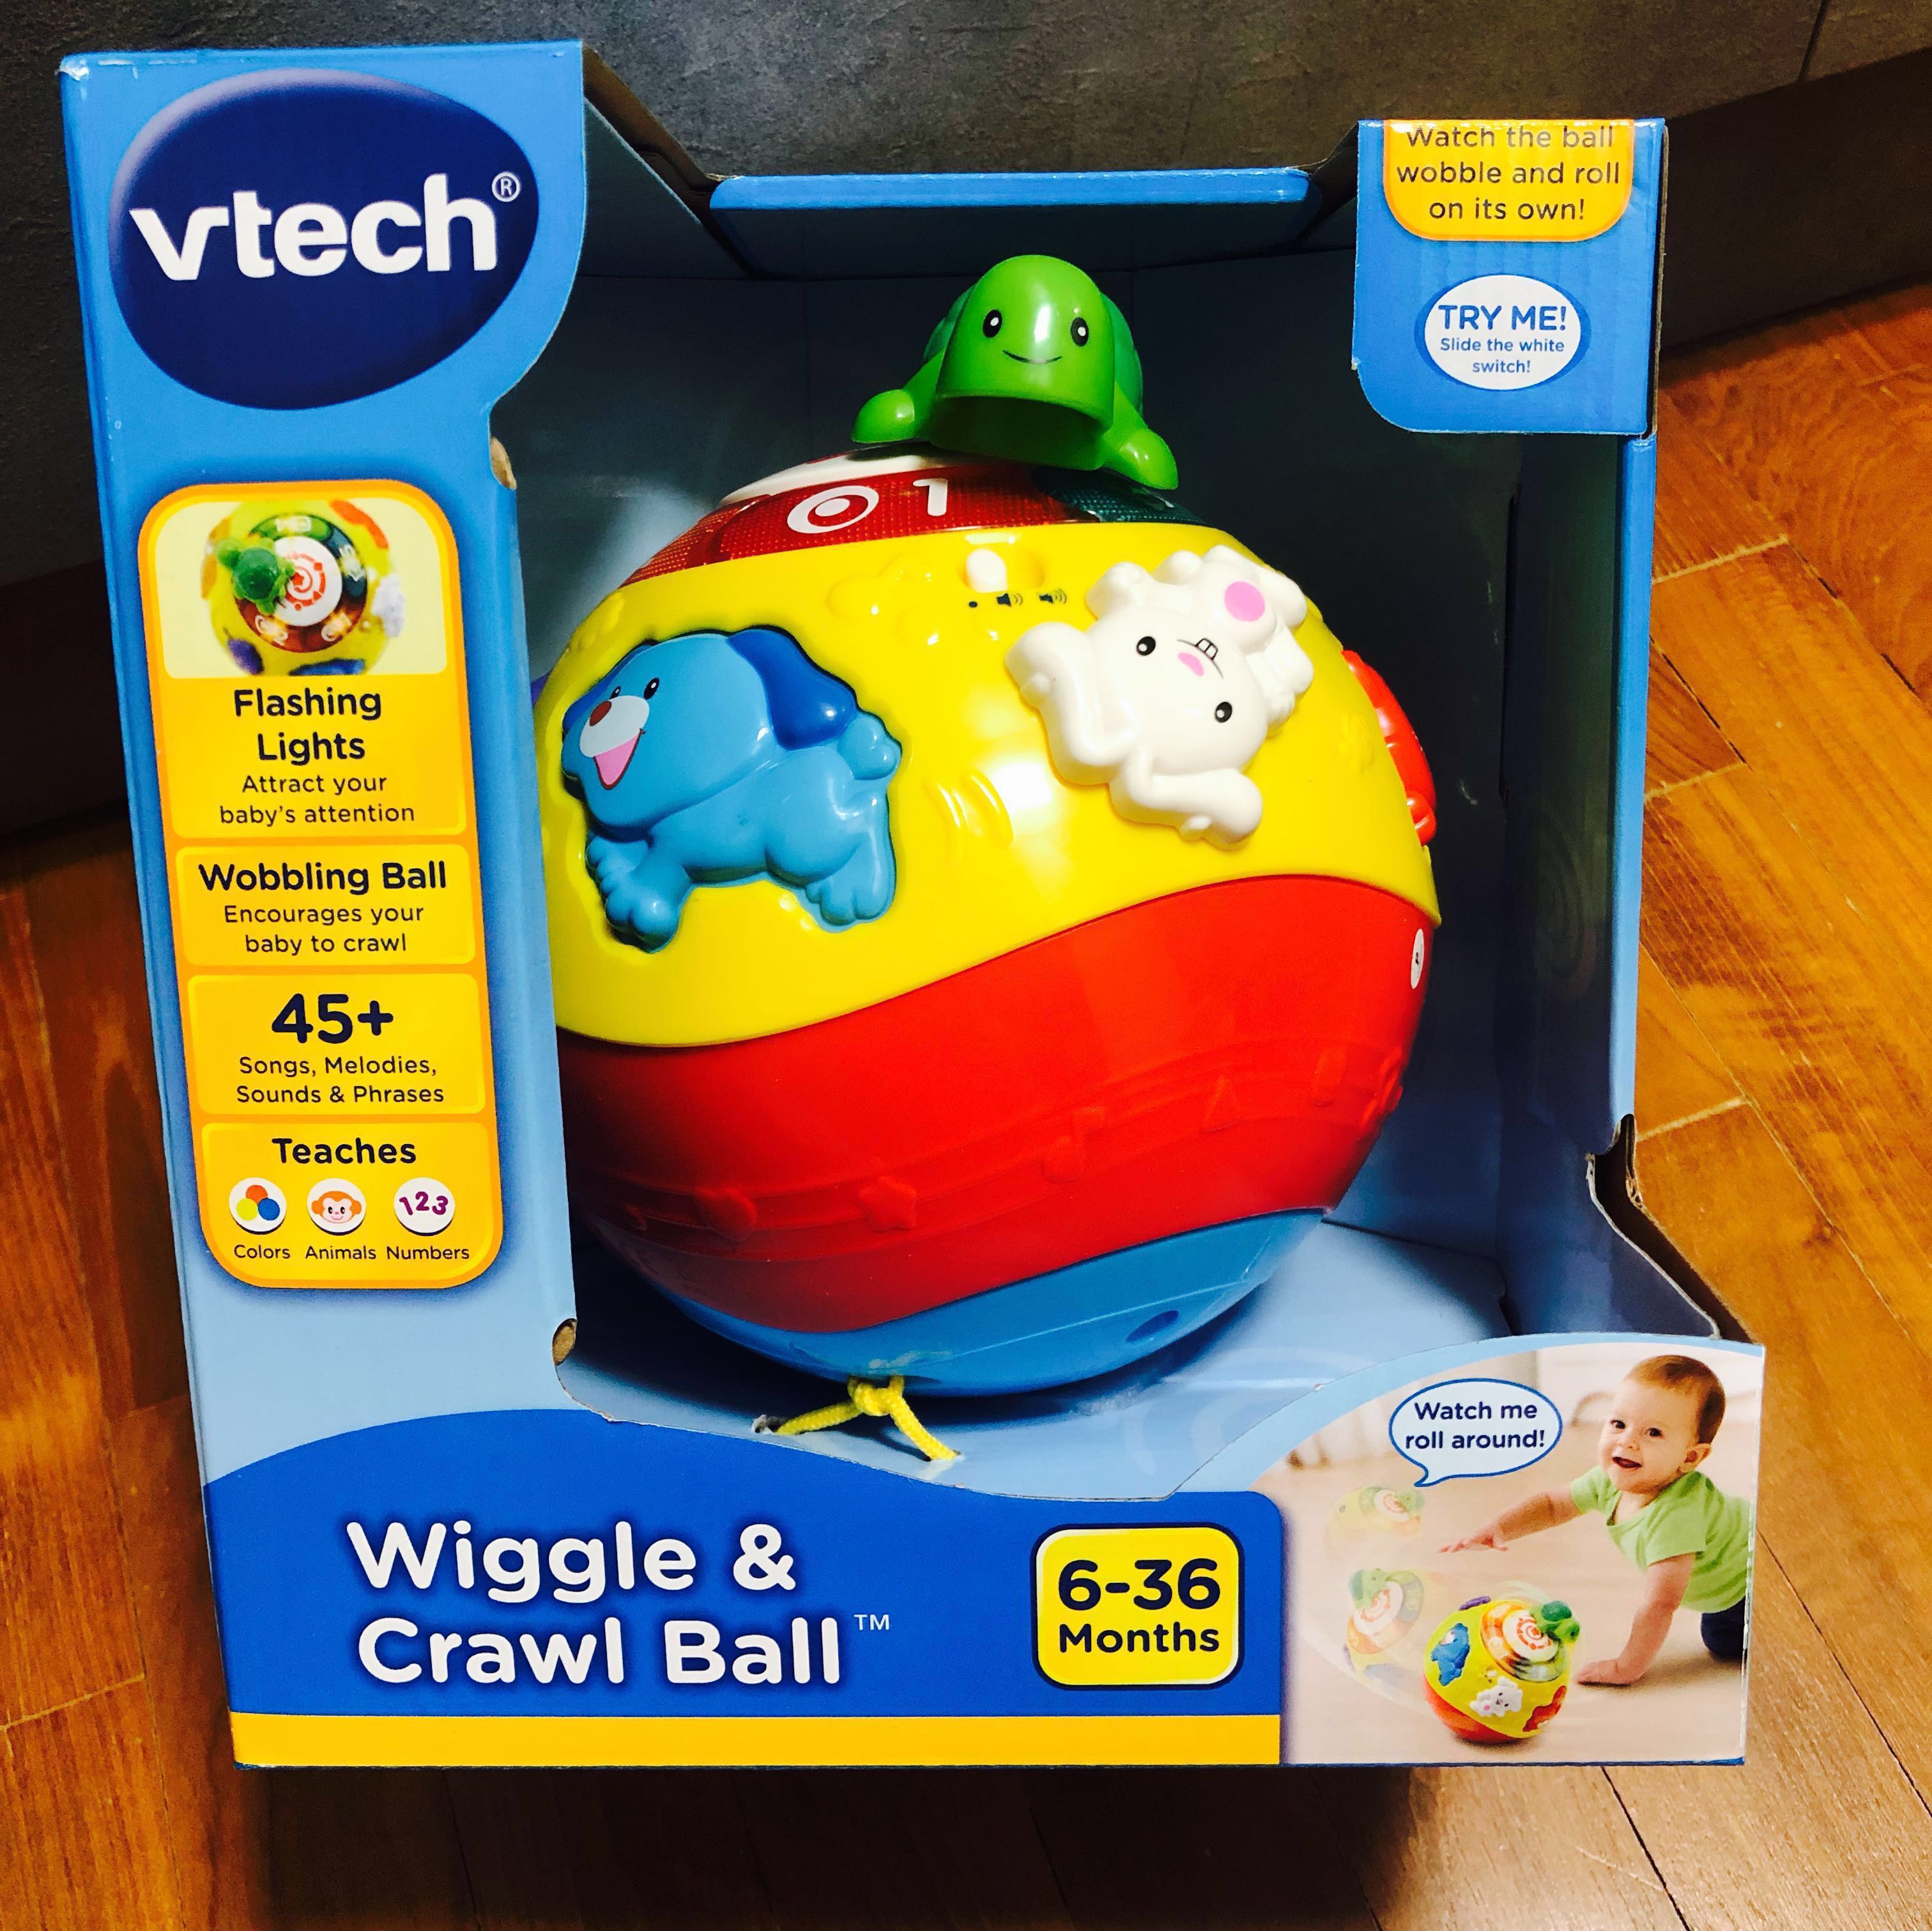 vtech wiggle & crawl ball